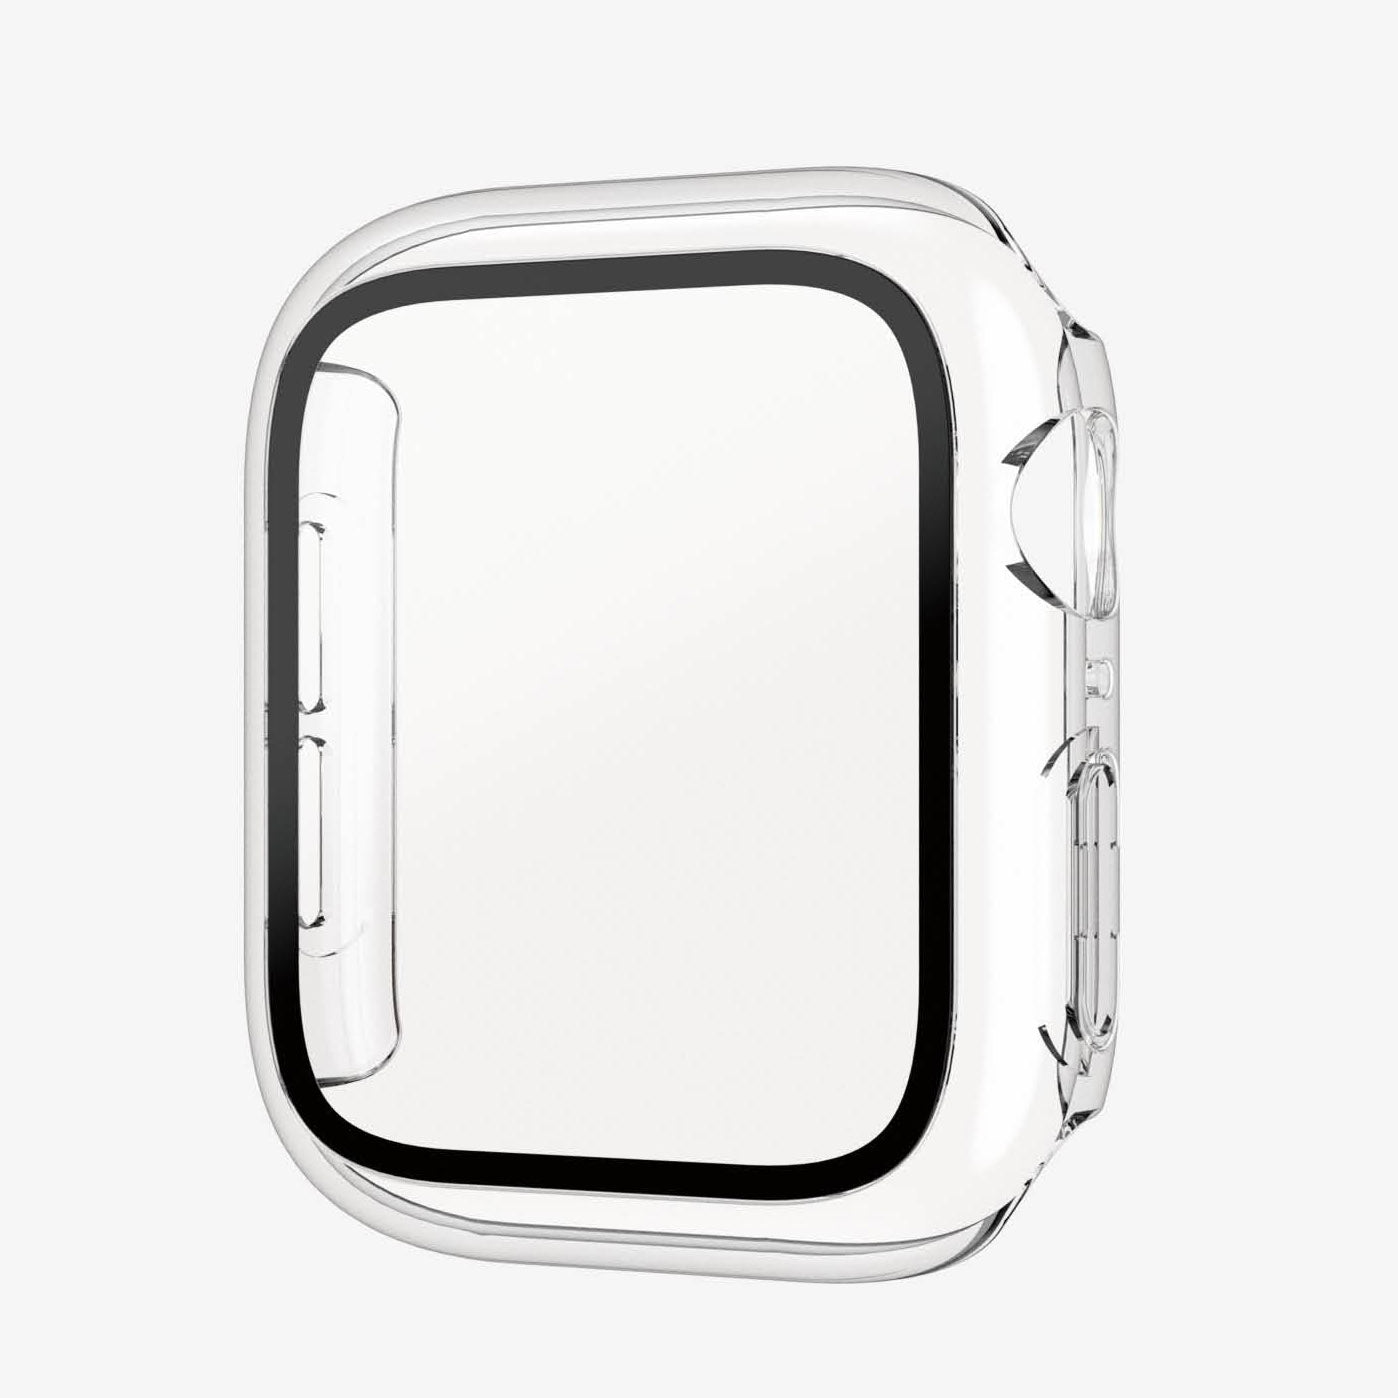 Antibakterielles Glas + Schutzhülle Panzerglass Full Body für Apple Watch 45mm, transparenter Rahmen